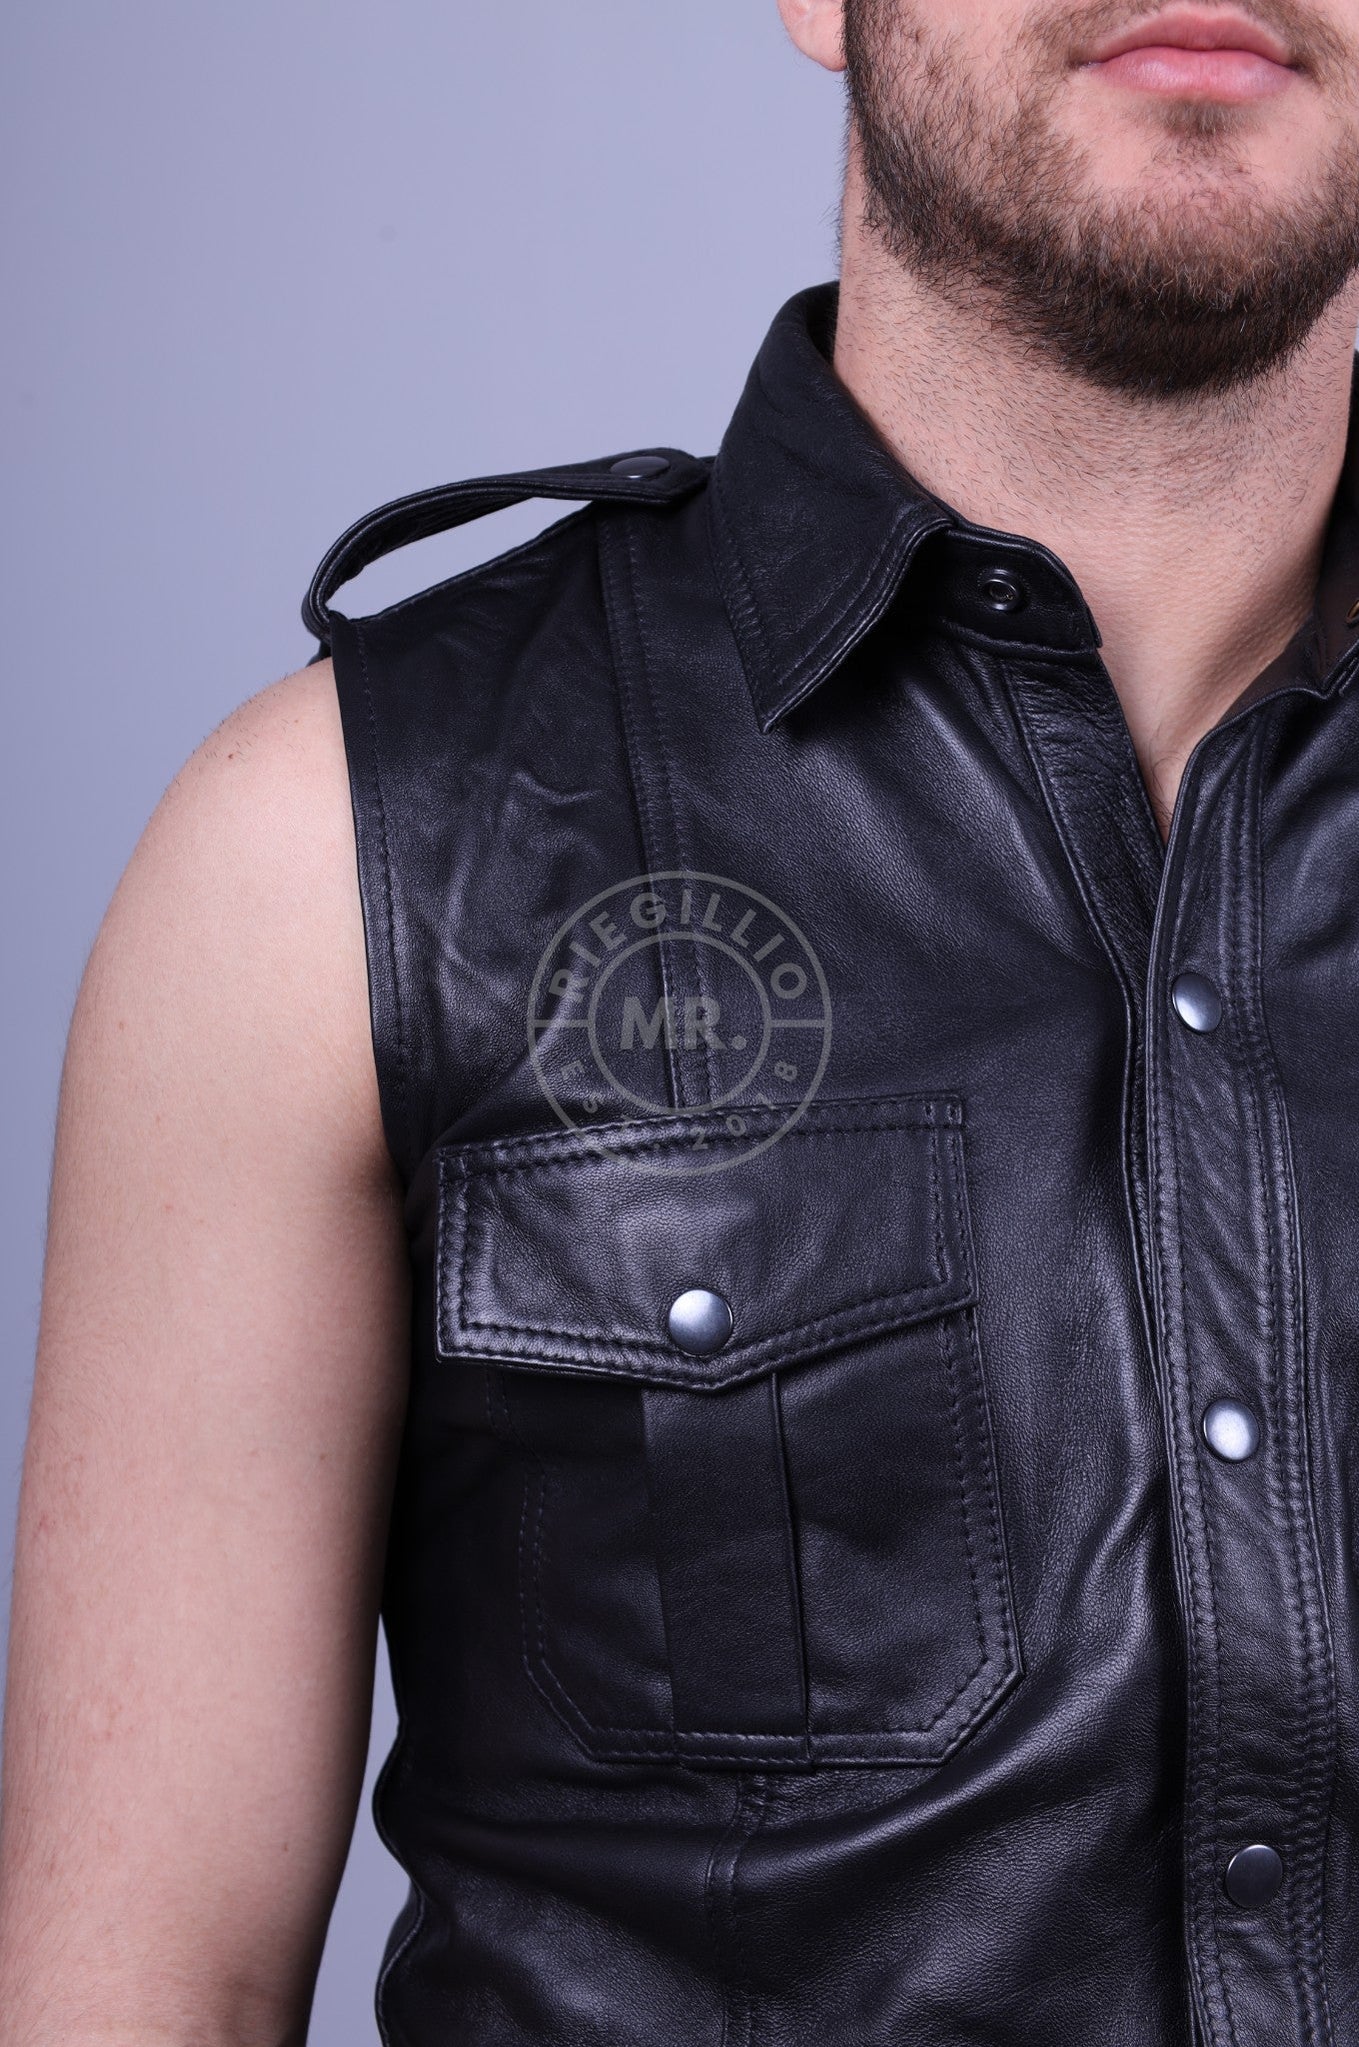 Black Leather Shirt - Sleeveless at MR. Riegillio